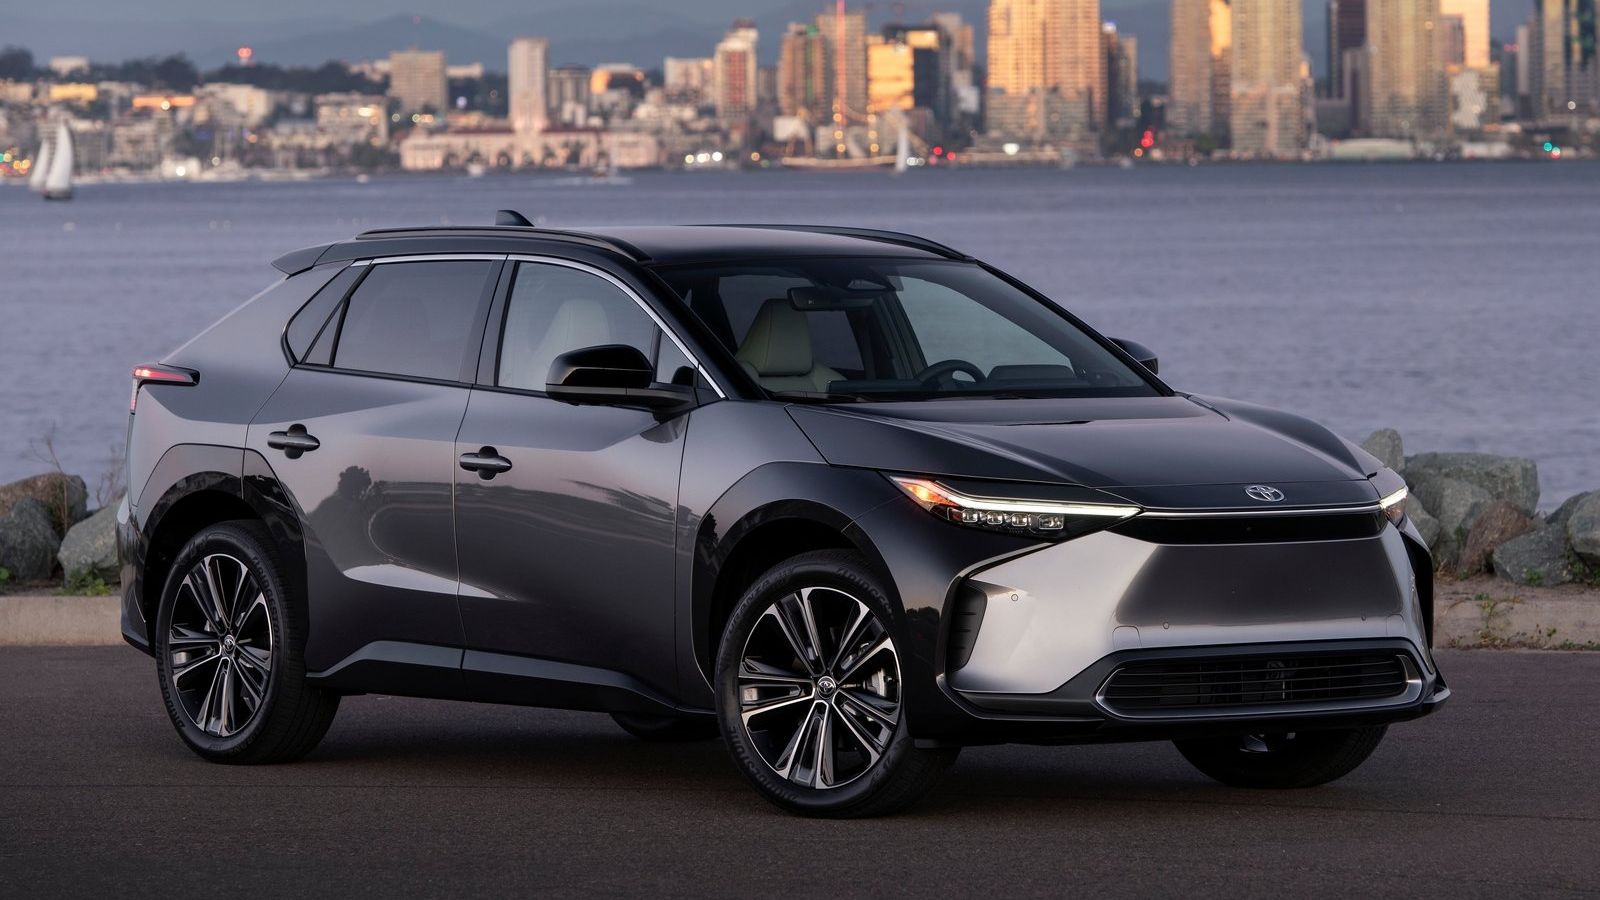 2023 Toyota bZ4X in Metallic Gray shade